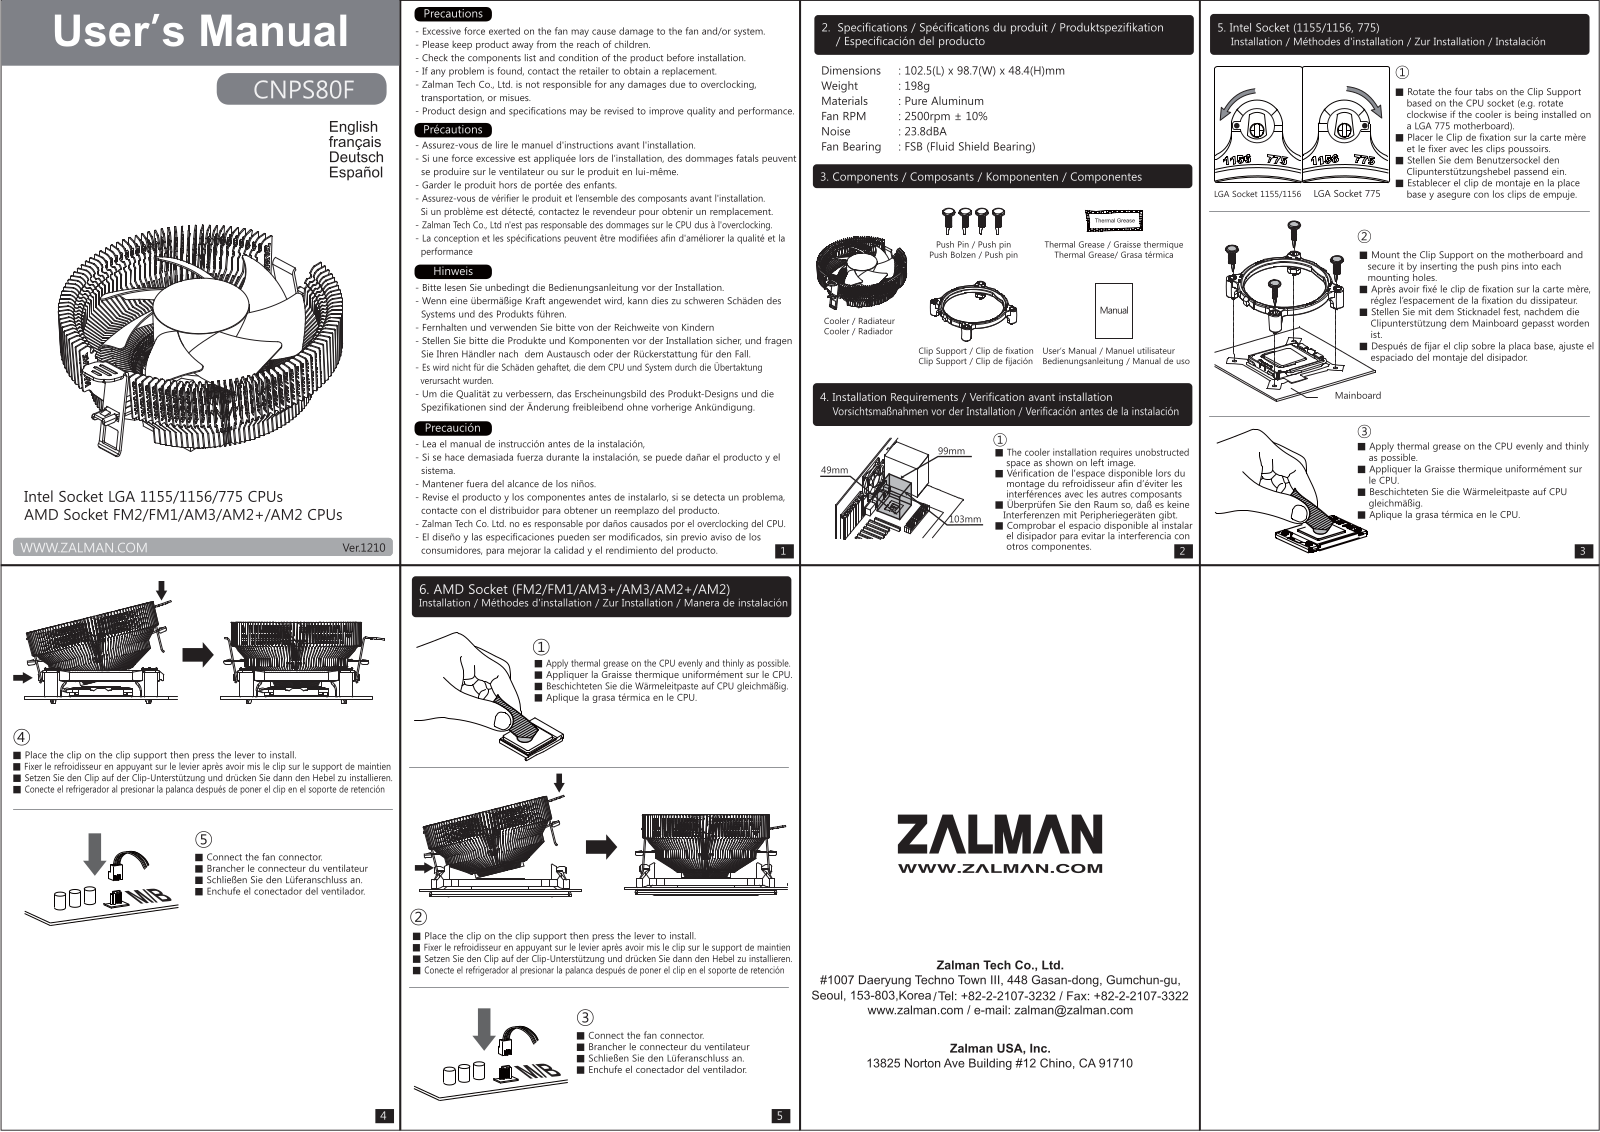 ZALMAN CNPS80F Manual